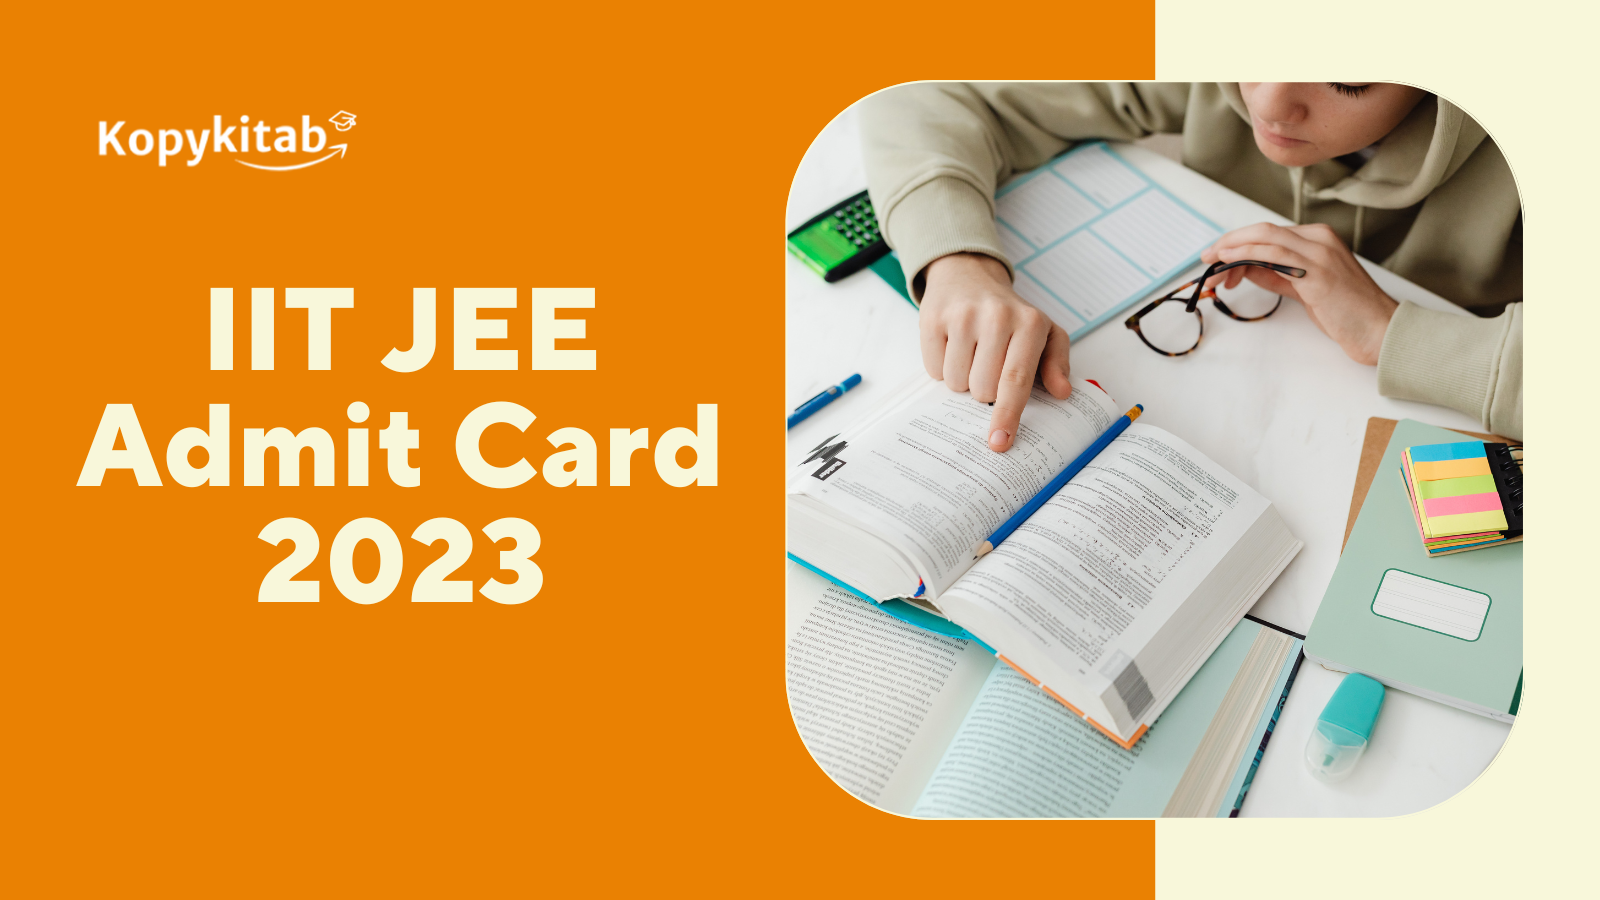 IIT JEE Admit Card 2023